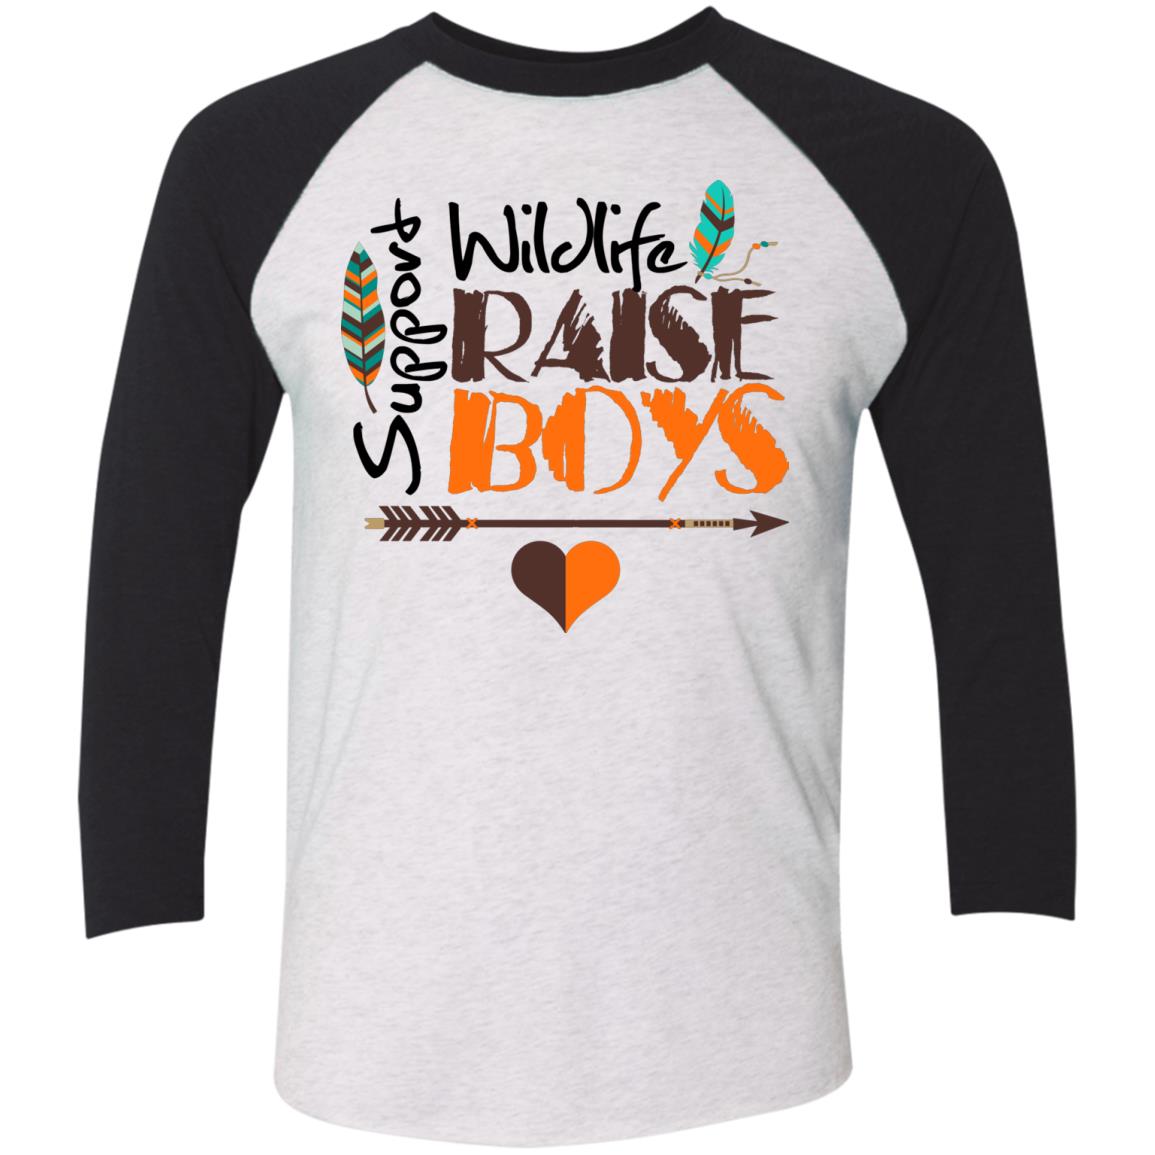 Mom Gifts Baseball Raglan T-Shirt - Support Wildlife Raise Boys - GoneBold.gift